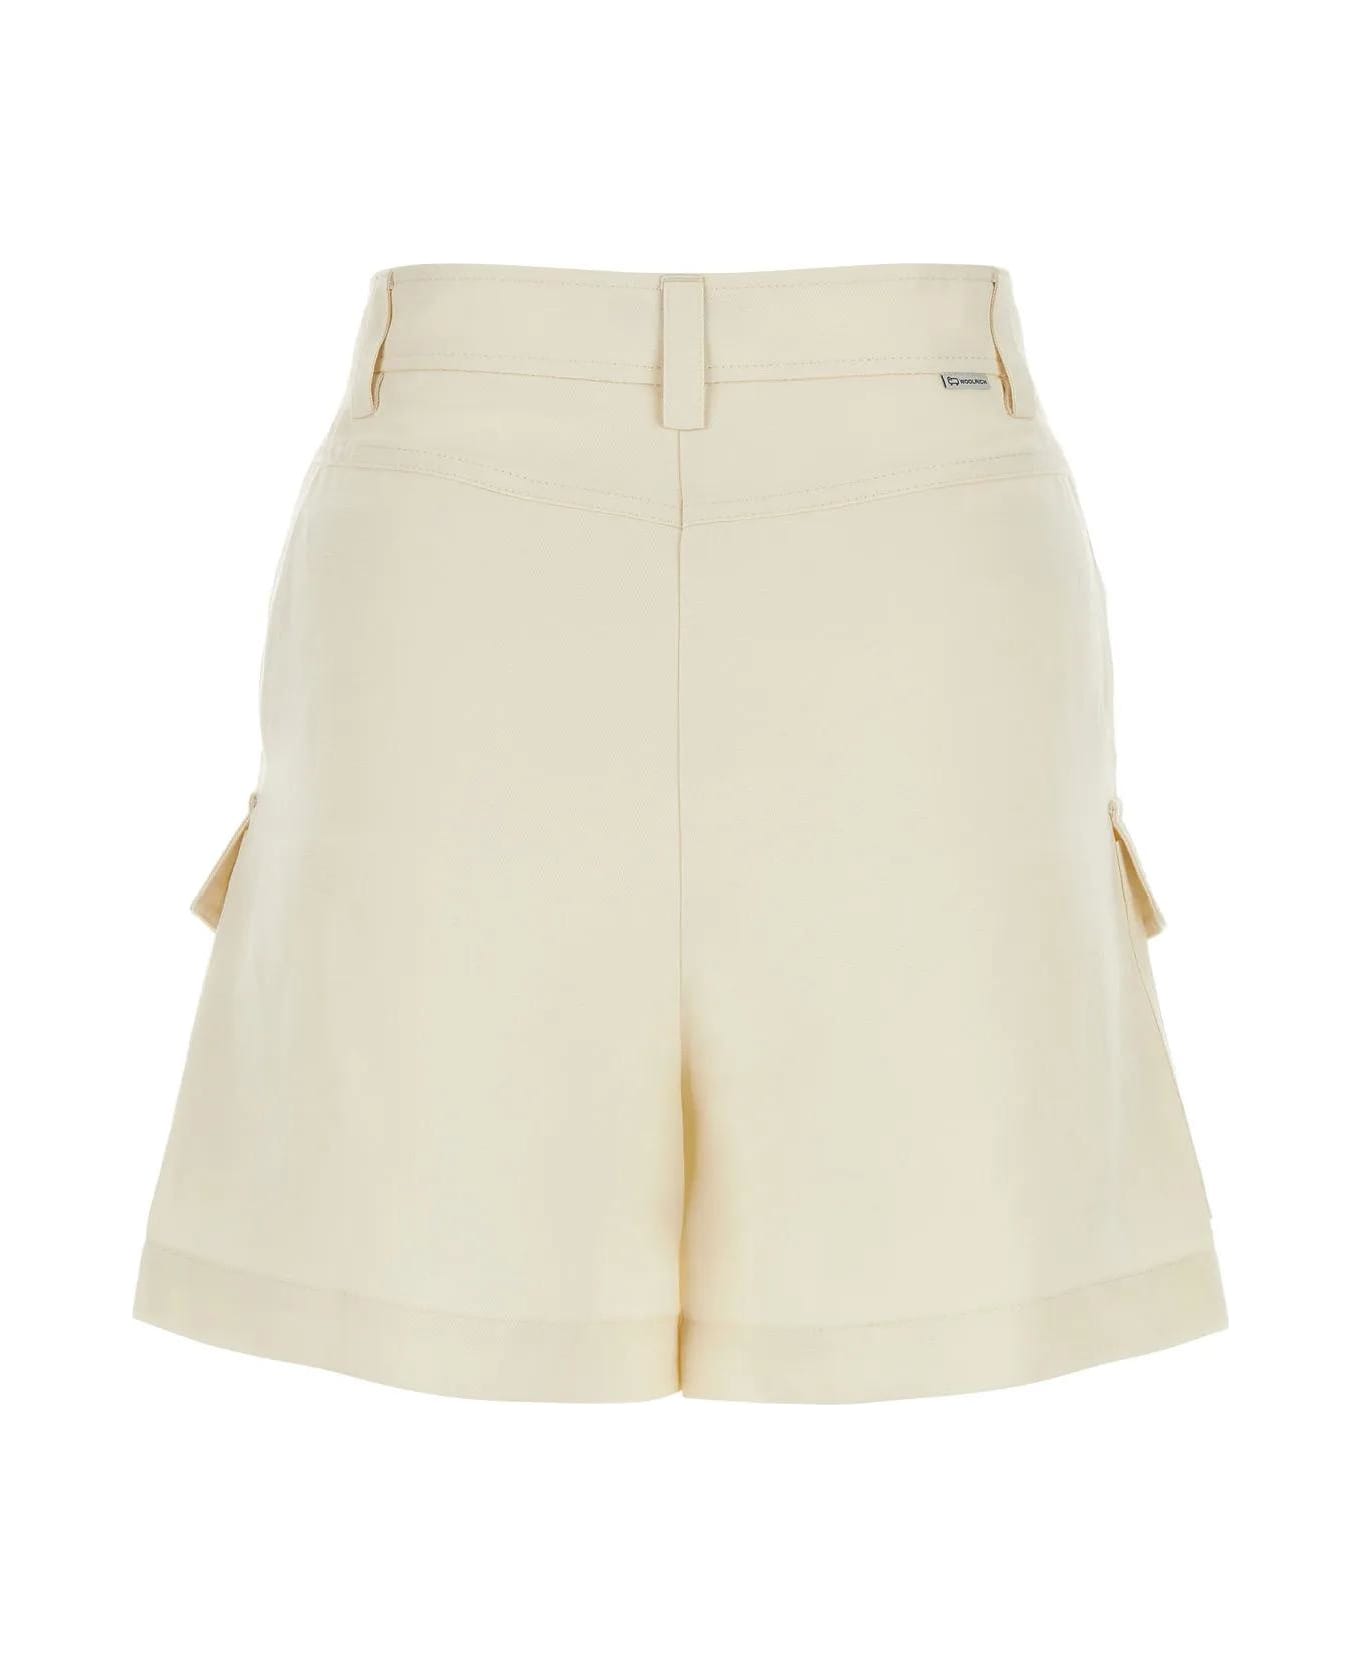 Woolrich Ivory Viscose Blend Shorts - Bianco